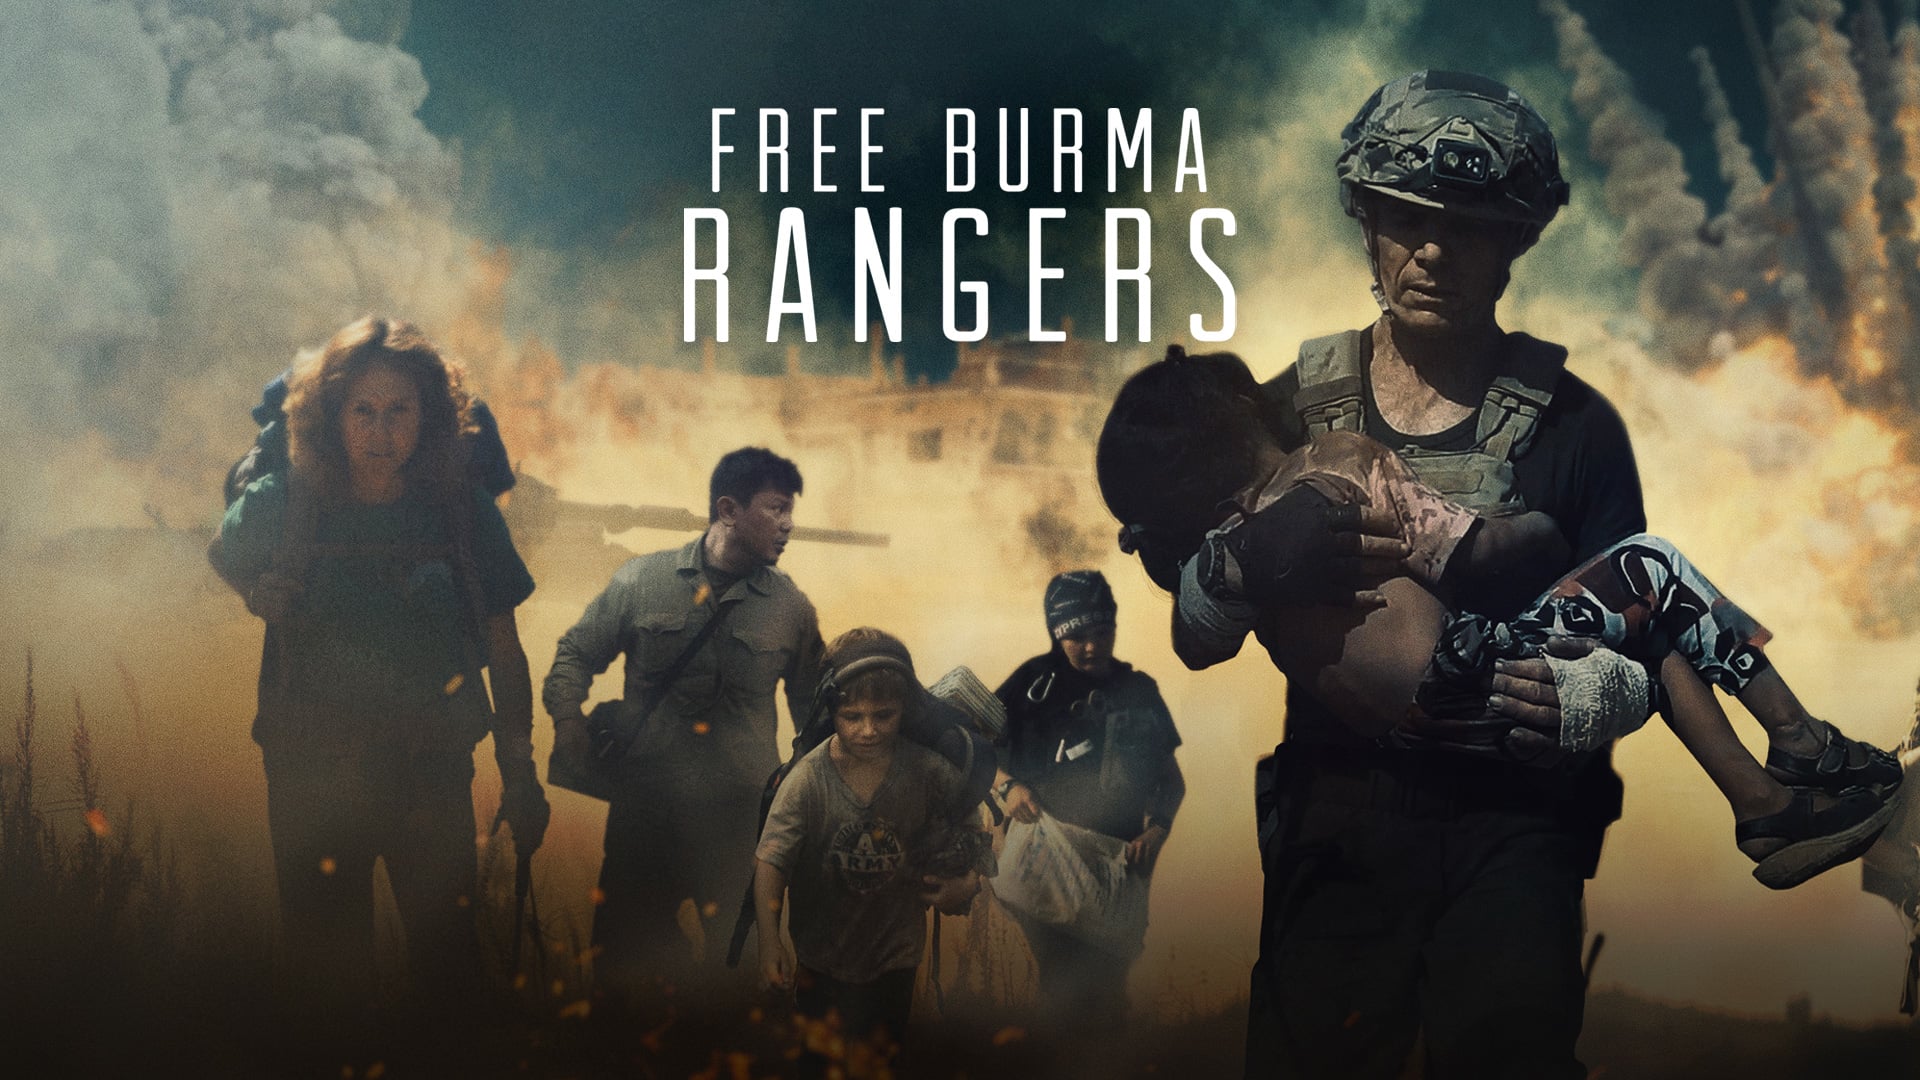 Watch Free Burma Rangers Online Vimeo On Demand on Vimeo